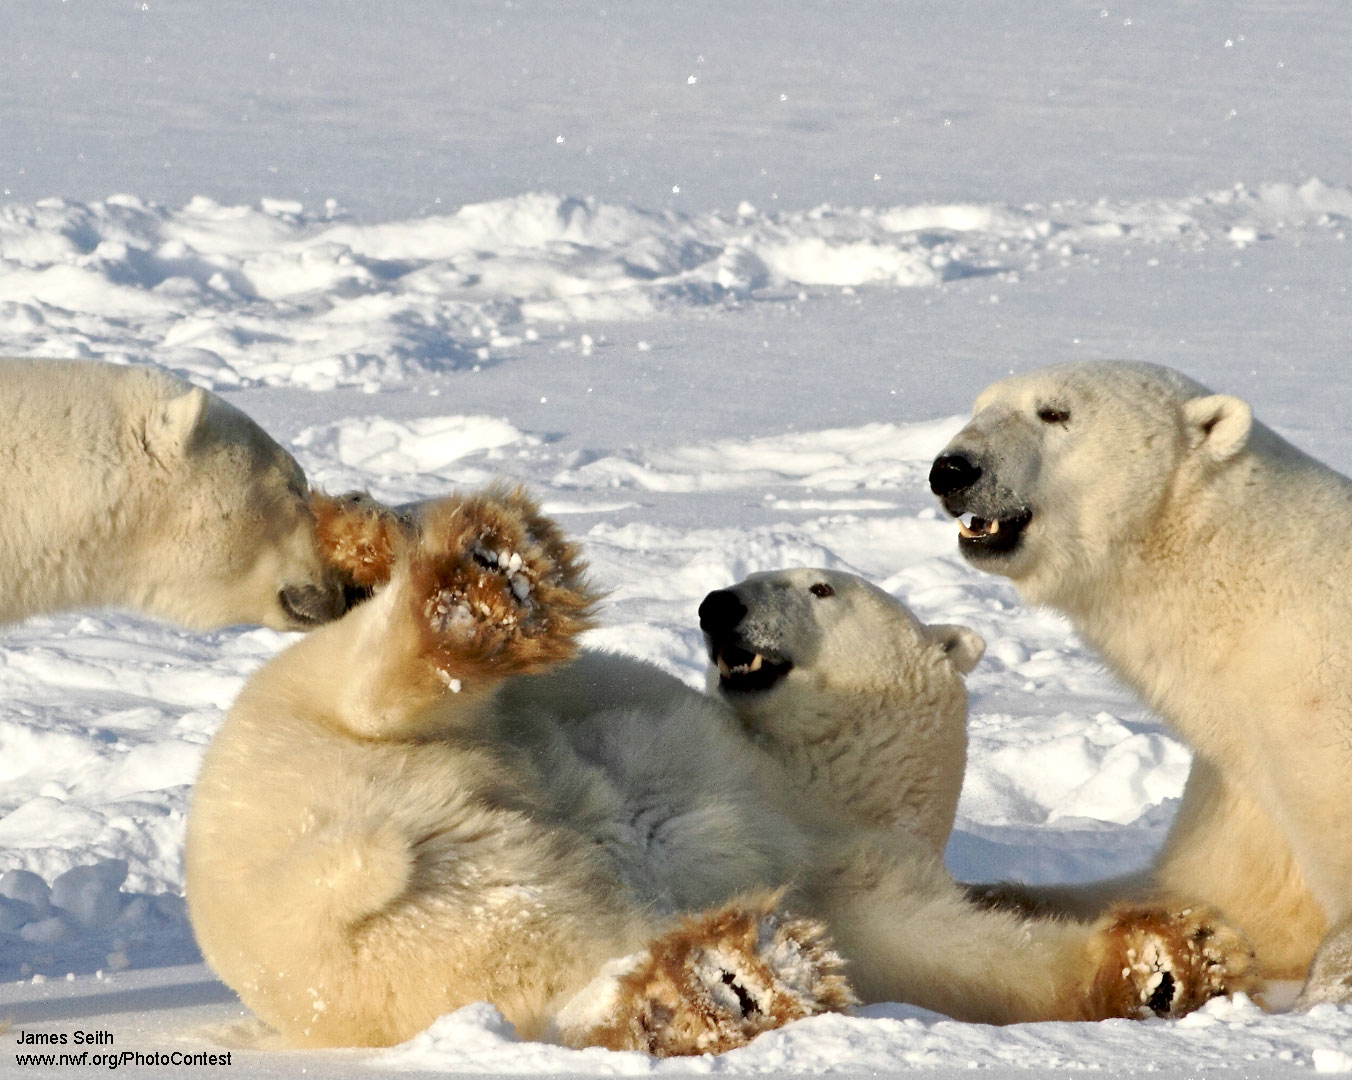 Polar Bears by National Wildlife Photo Contest entrant James Seith.